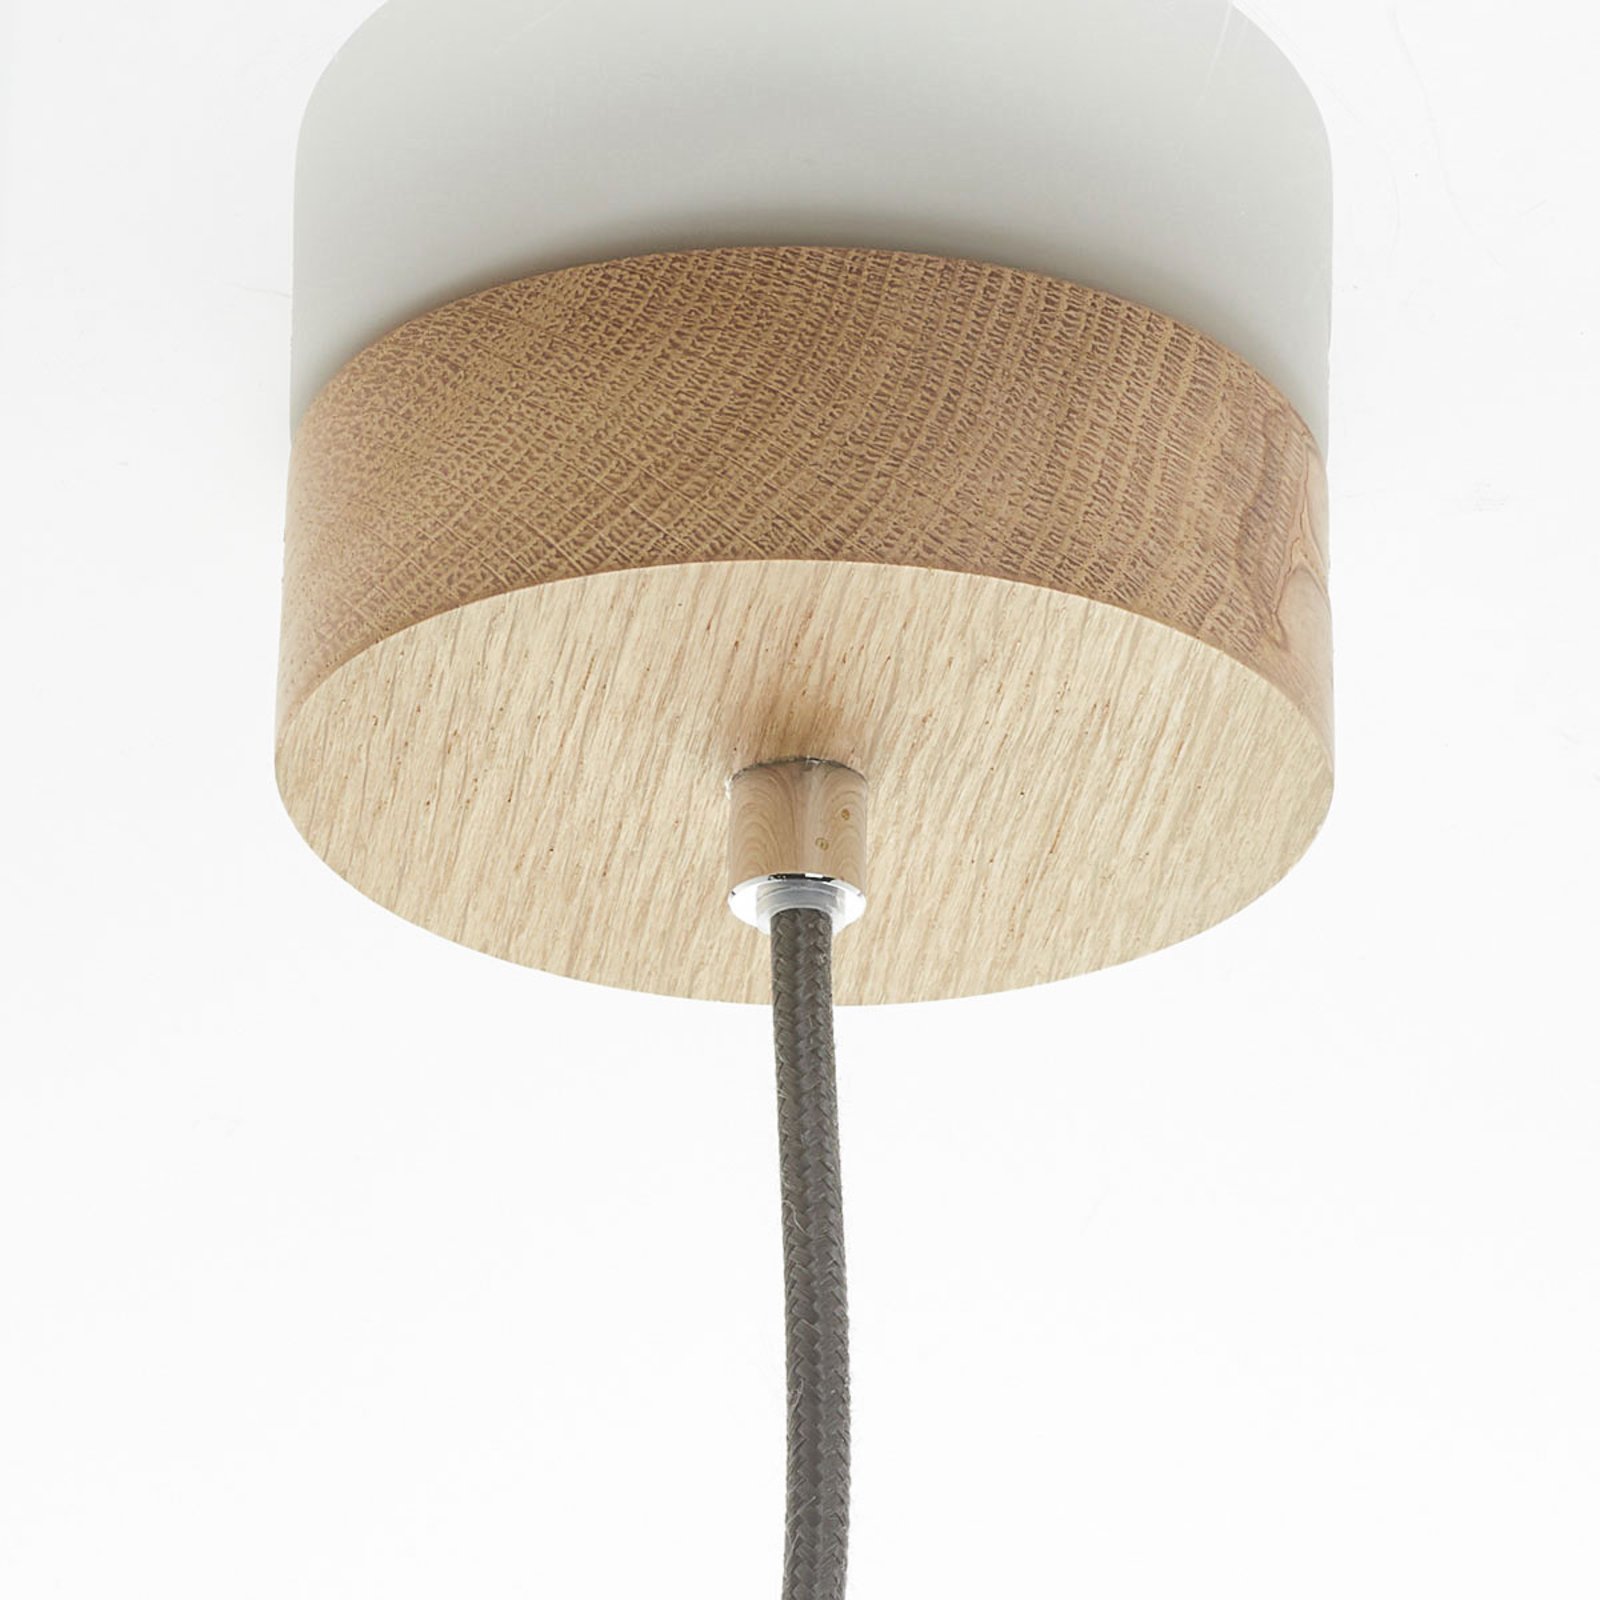 Eenlamp -LED hanglamp Pipe in eikenhout